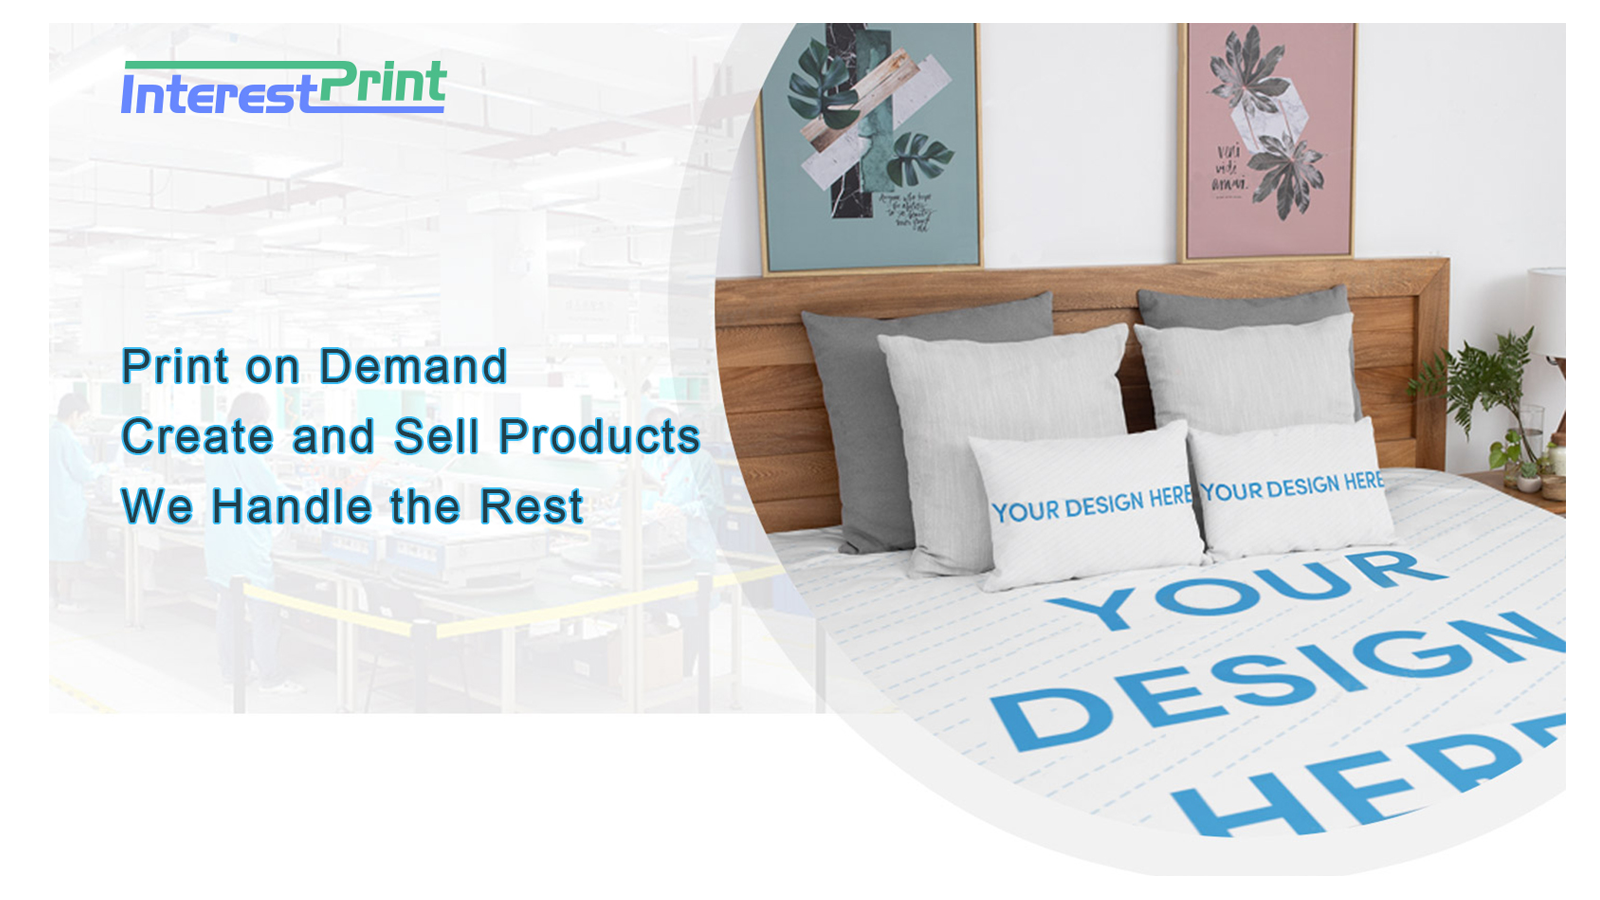 InterestPrint-Impresión bajo demanda